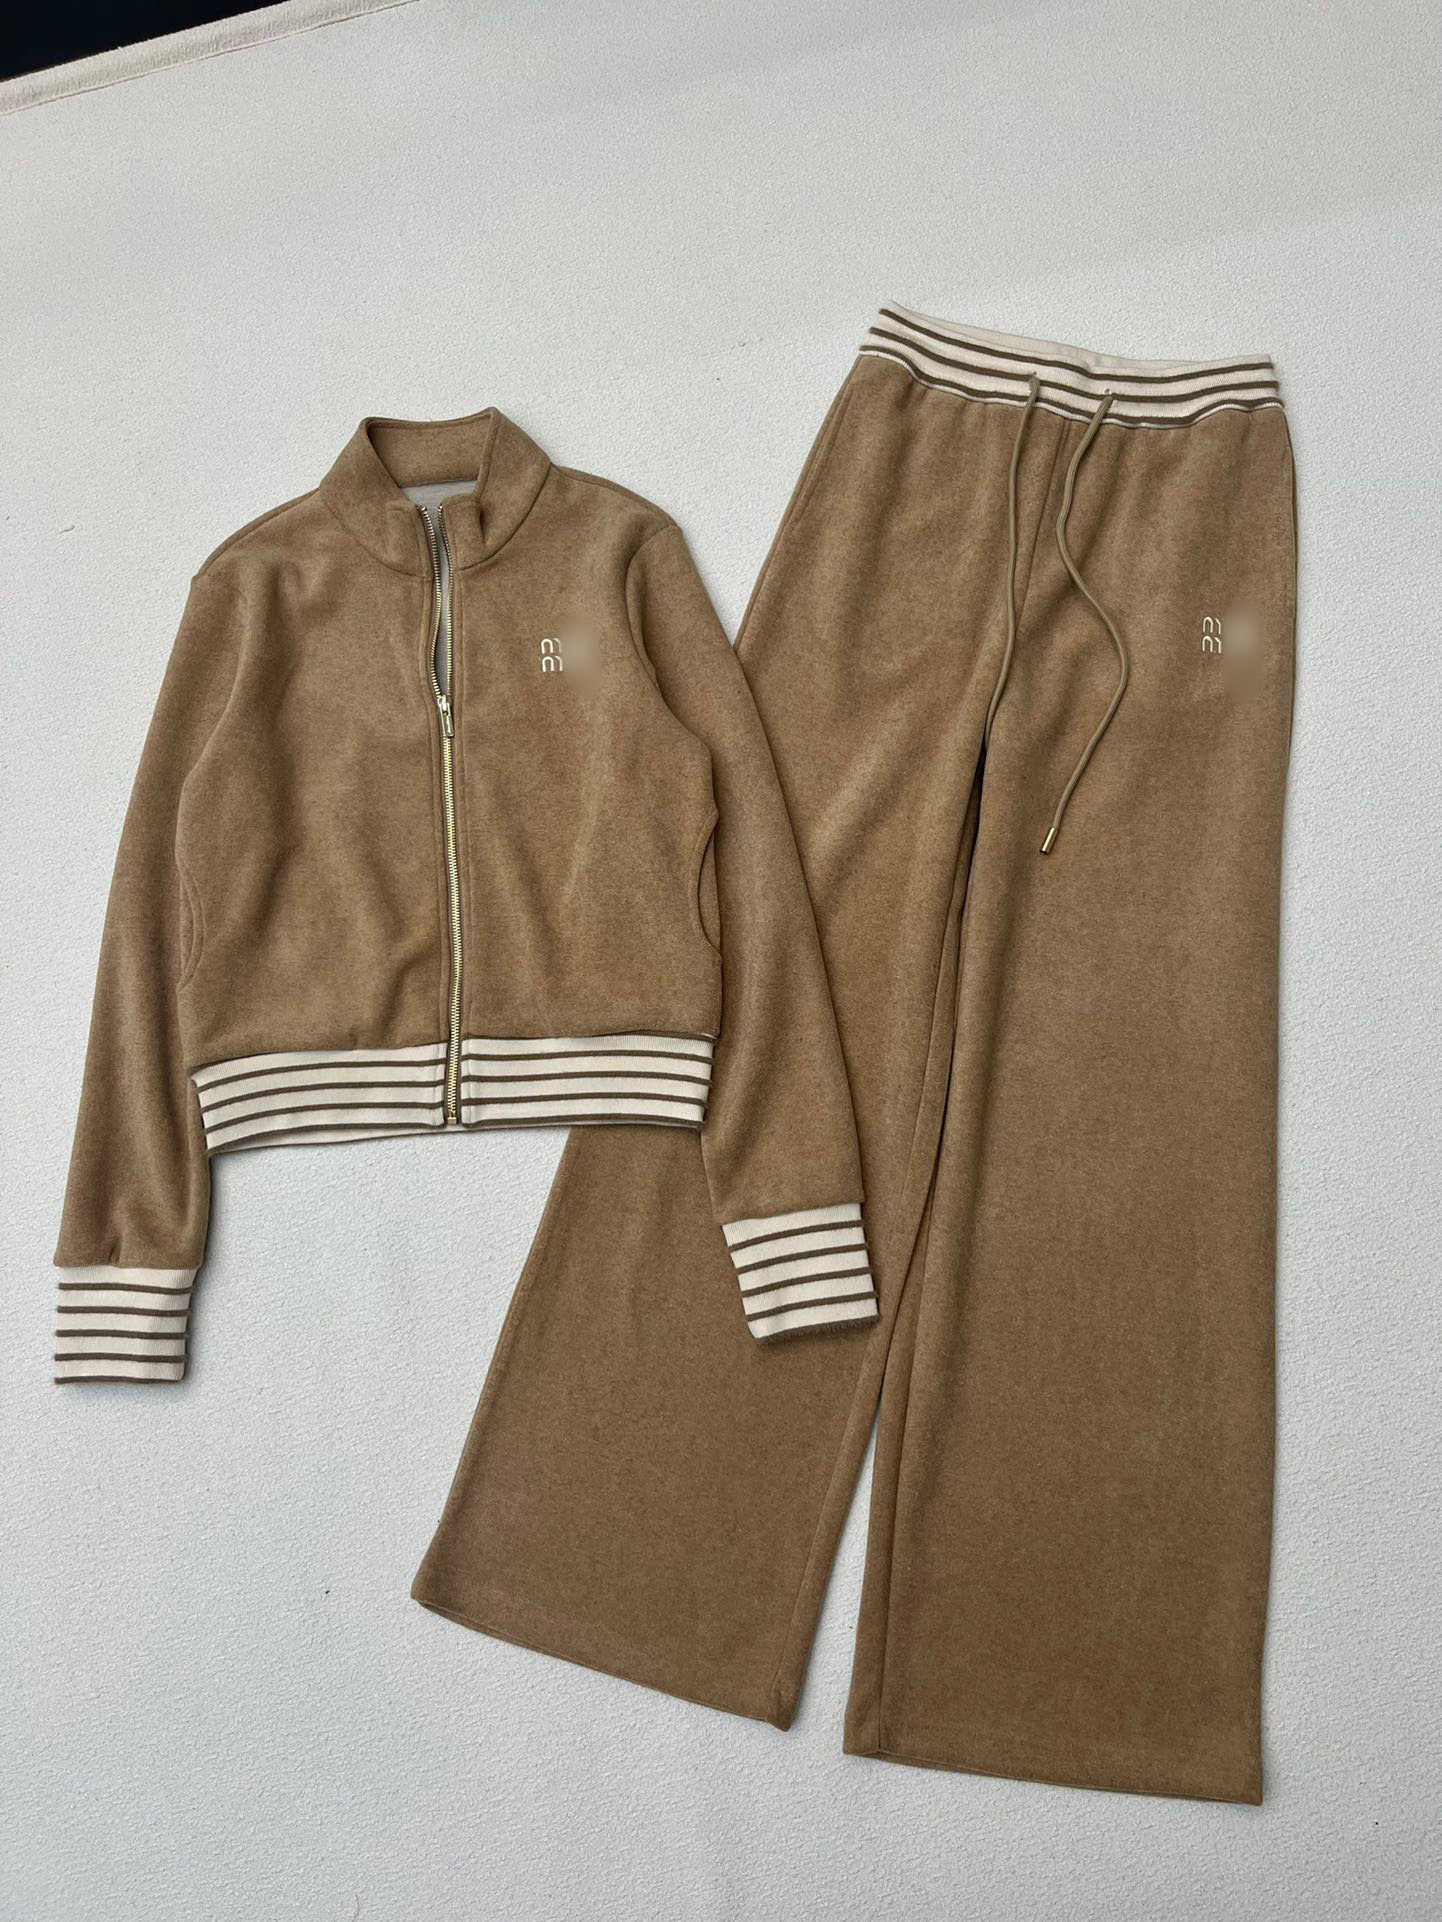 Cardingan pant Sweatshirt set pullover turtle neck cropped Women's tracker luxury designer Short Coat + Lace Up Wide Leg Pants Sportwear Outfits